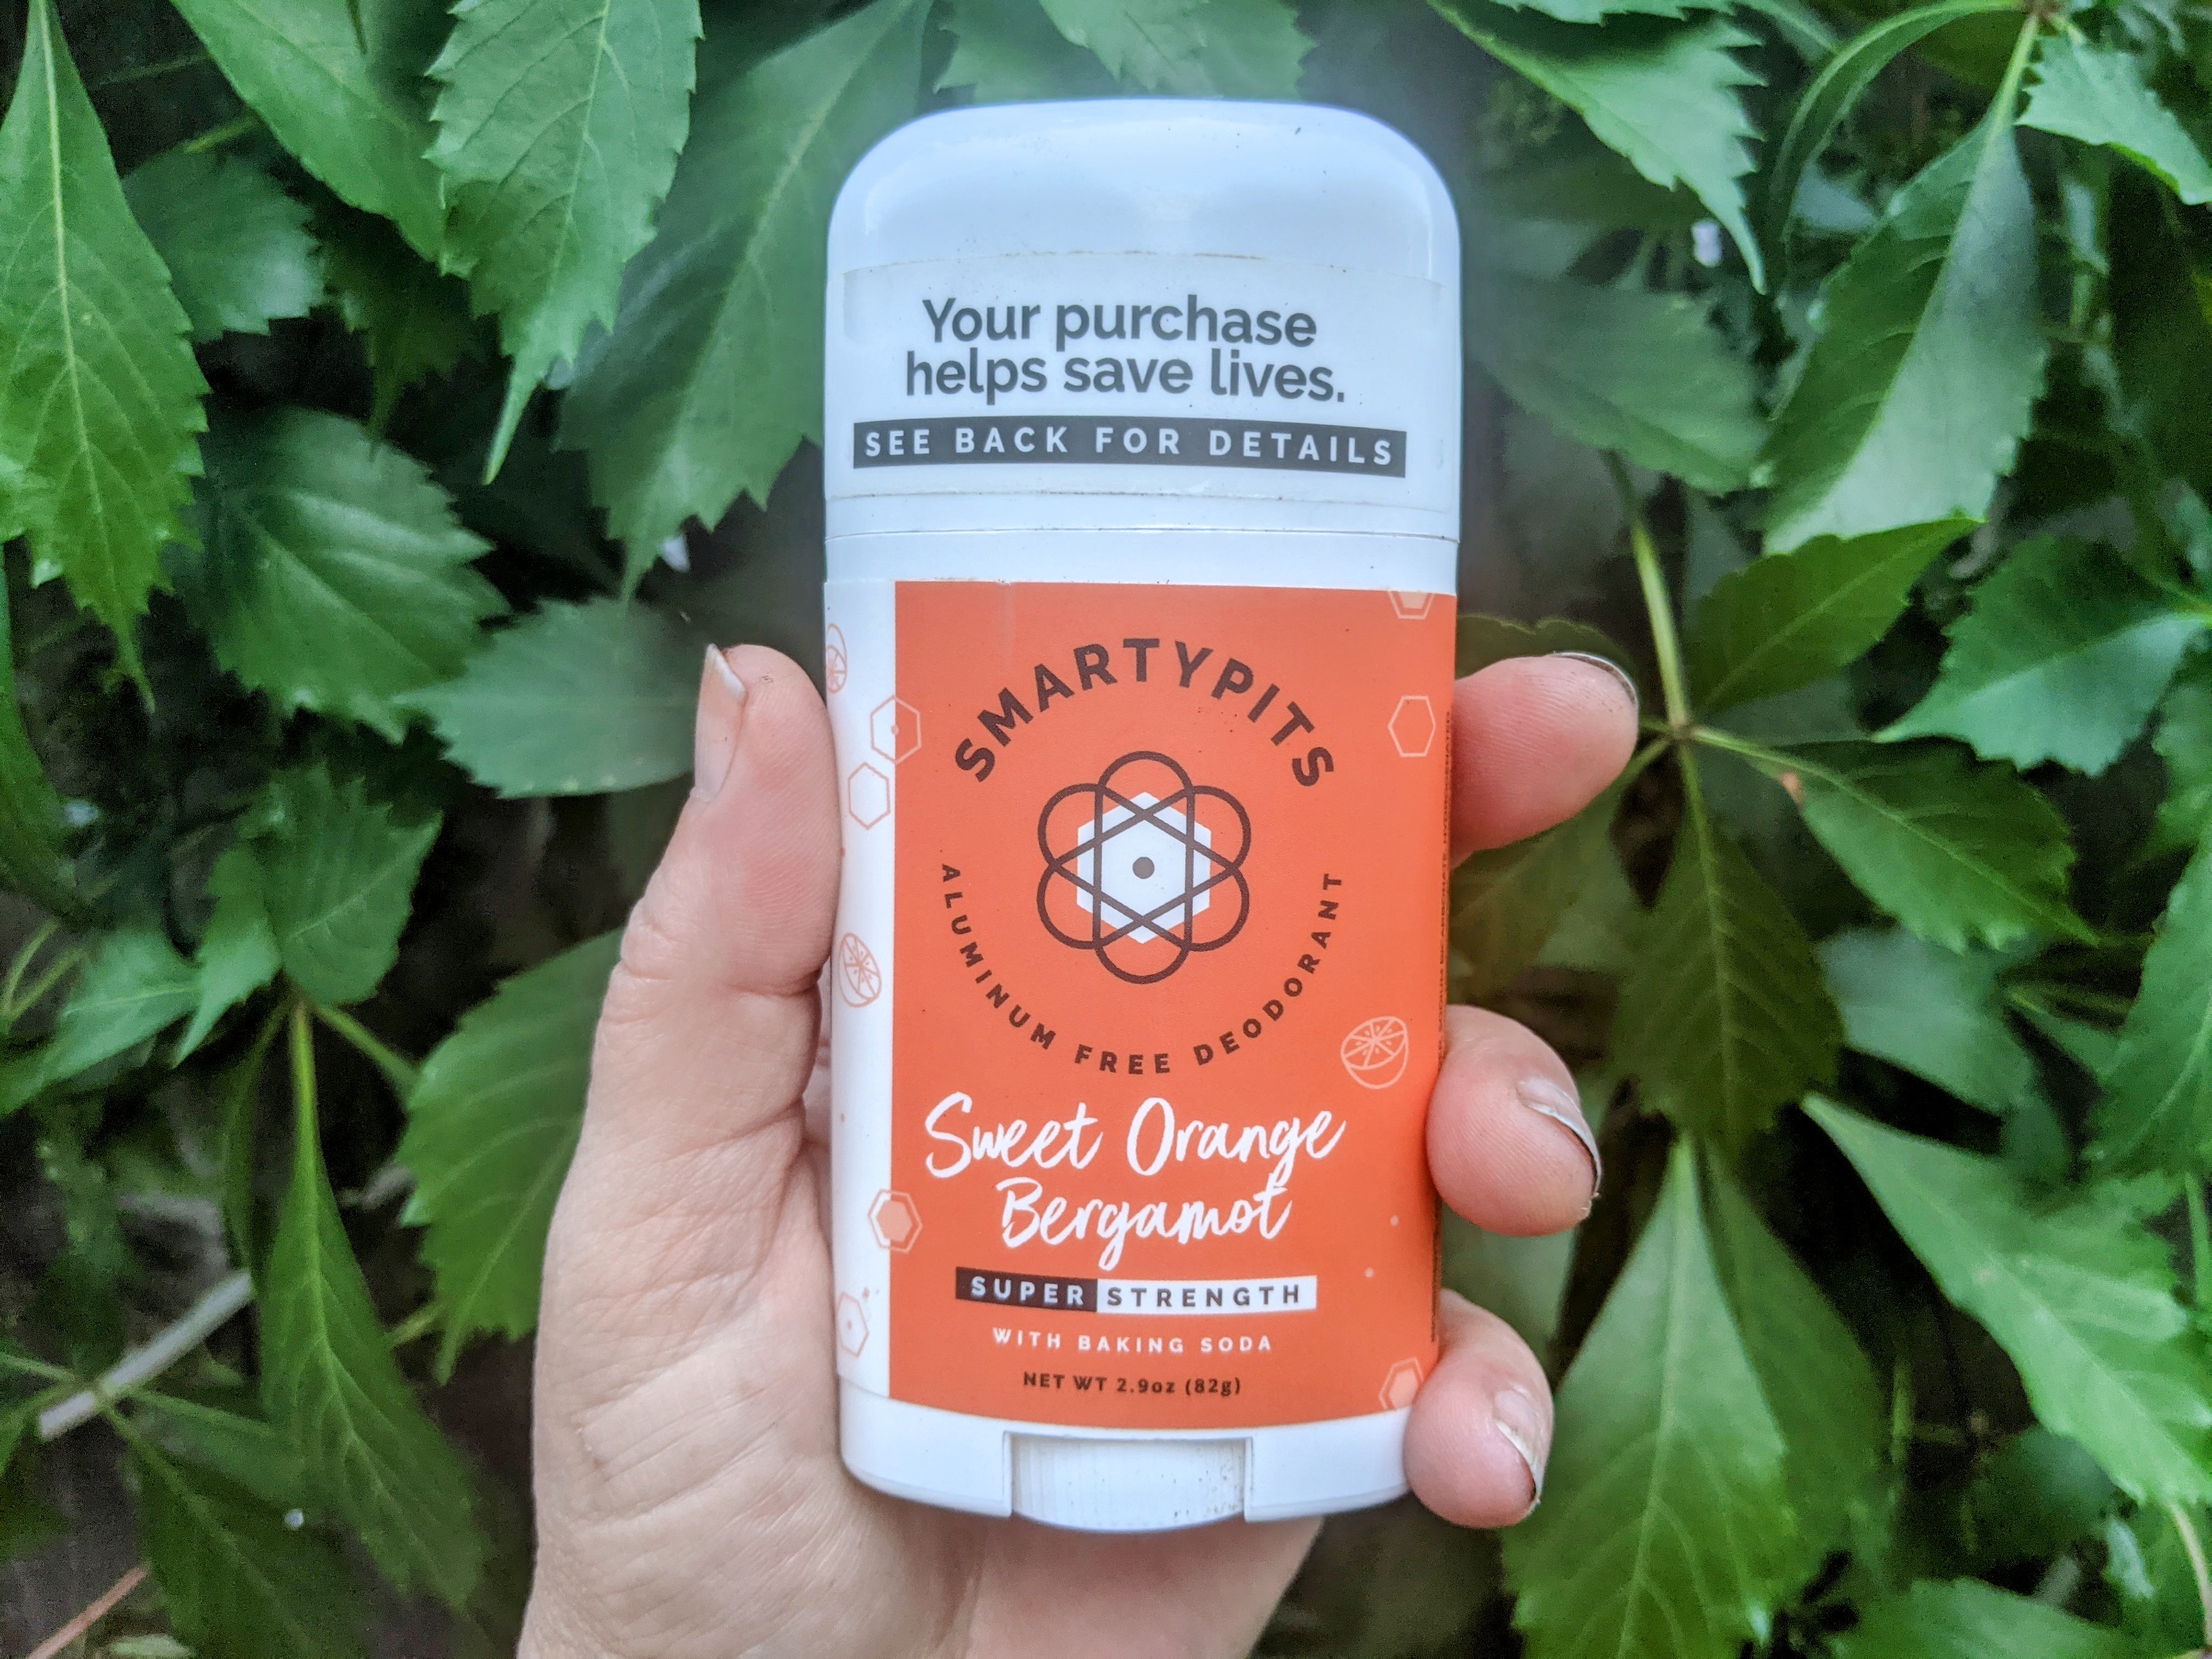 SmartyPits natural deodorant